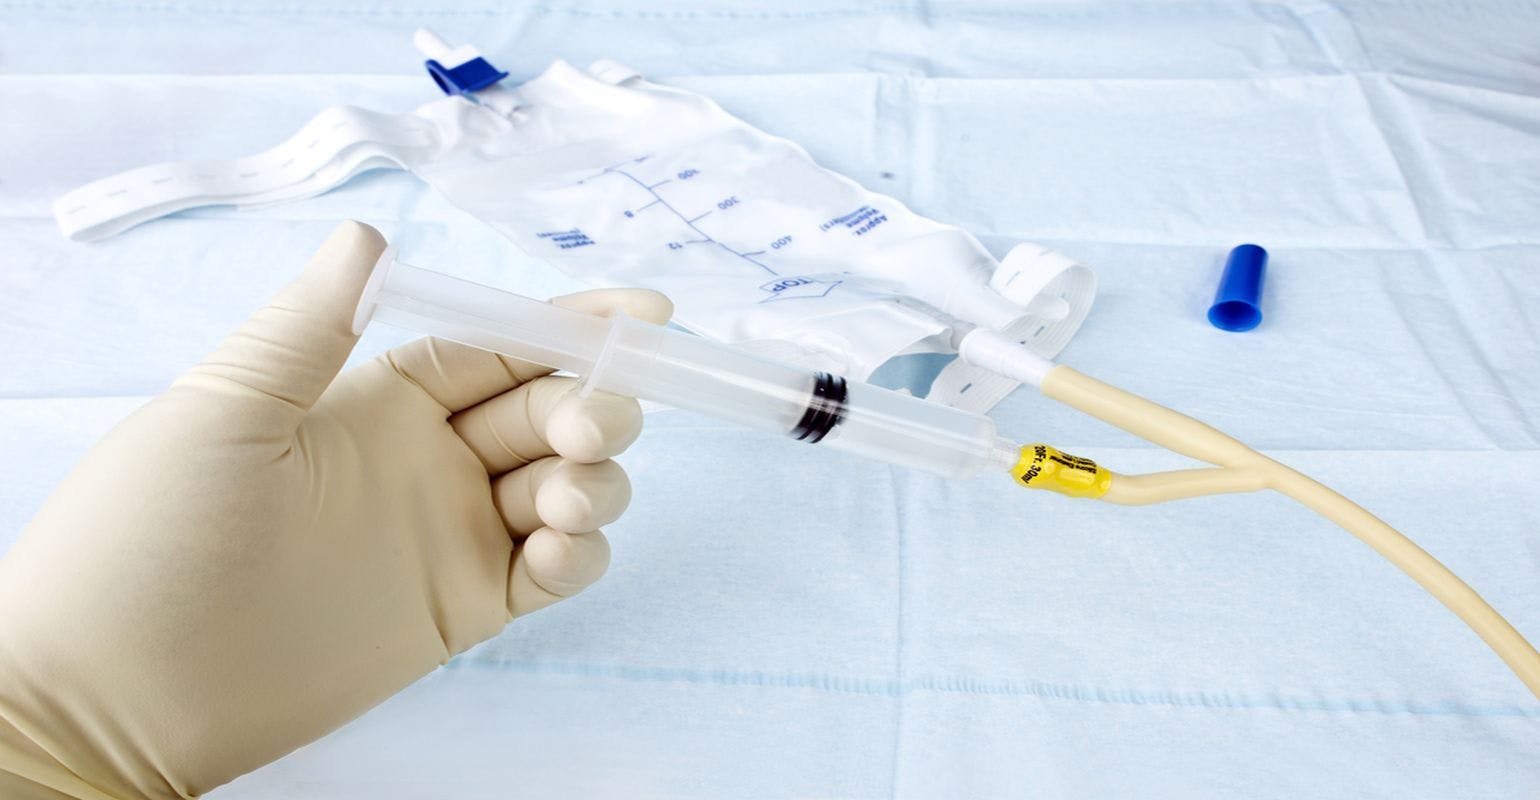 Catheters: Big Source of Infection, but Often Overlooked